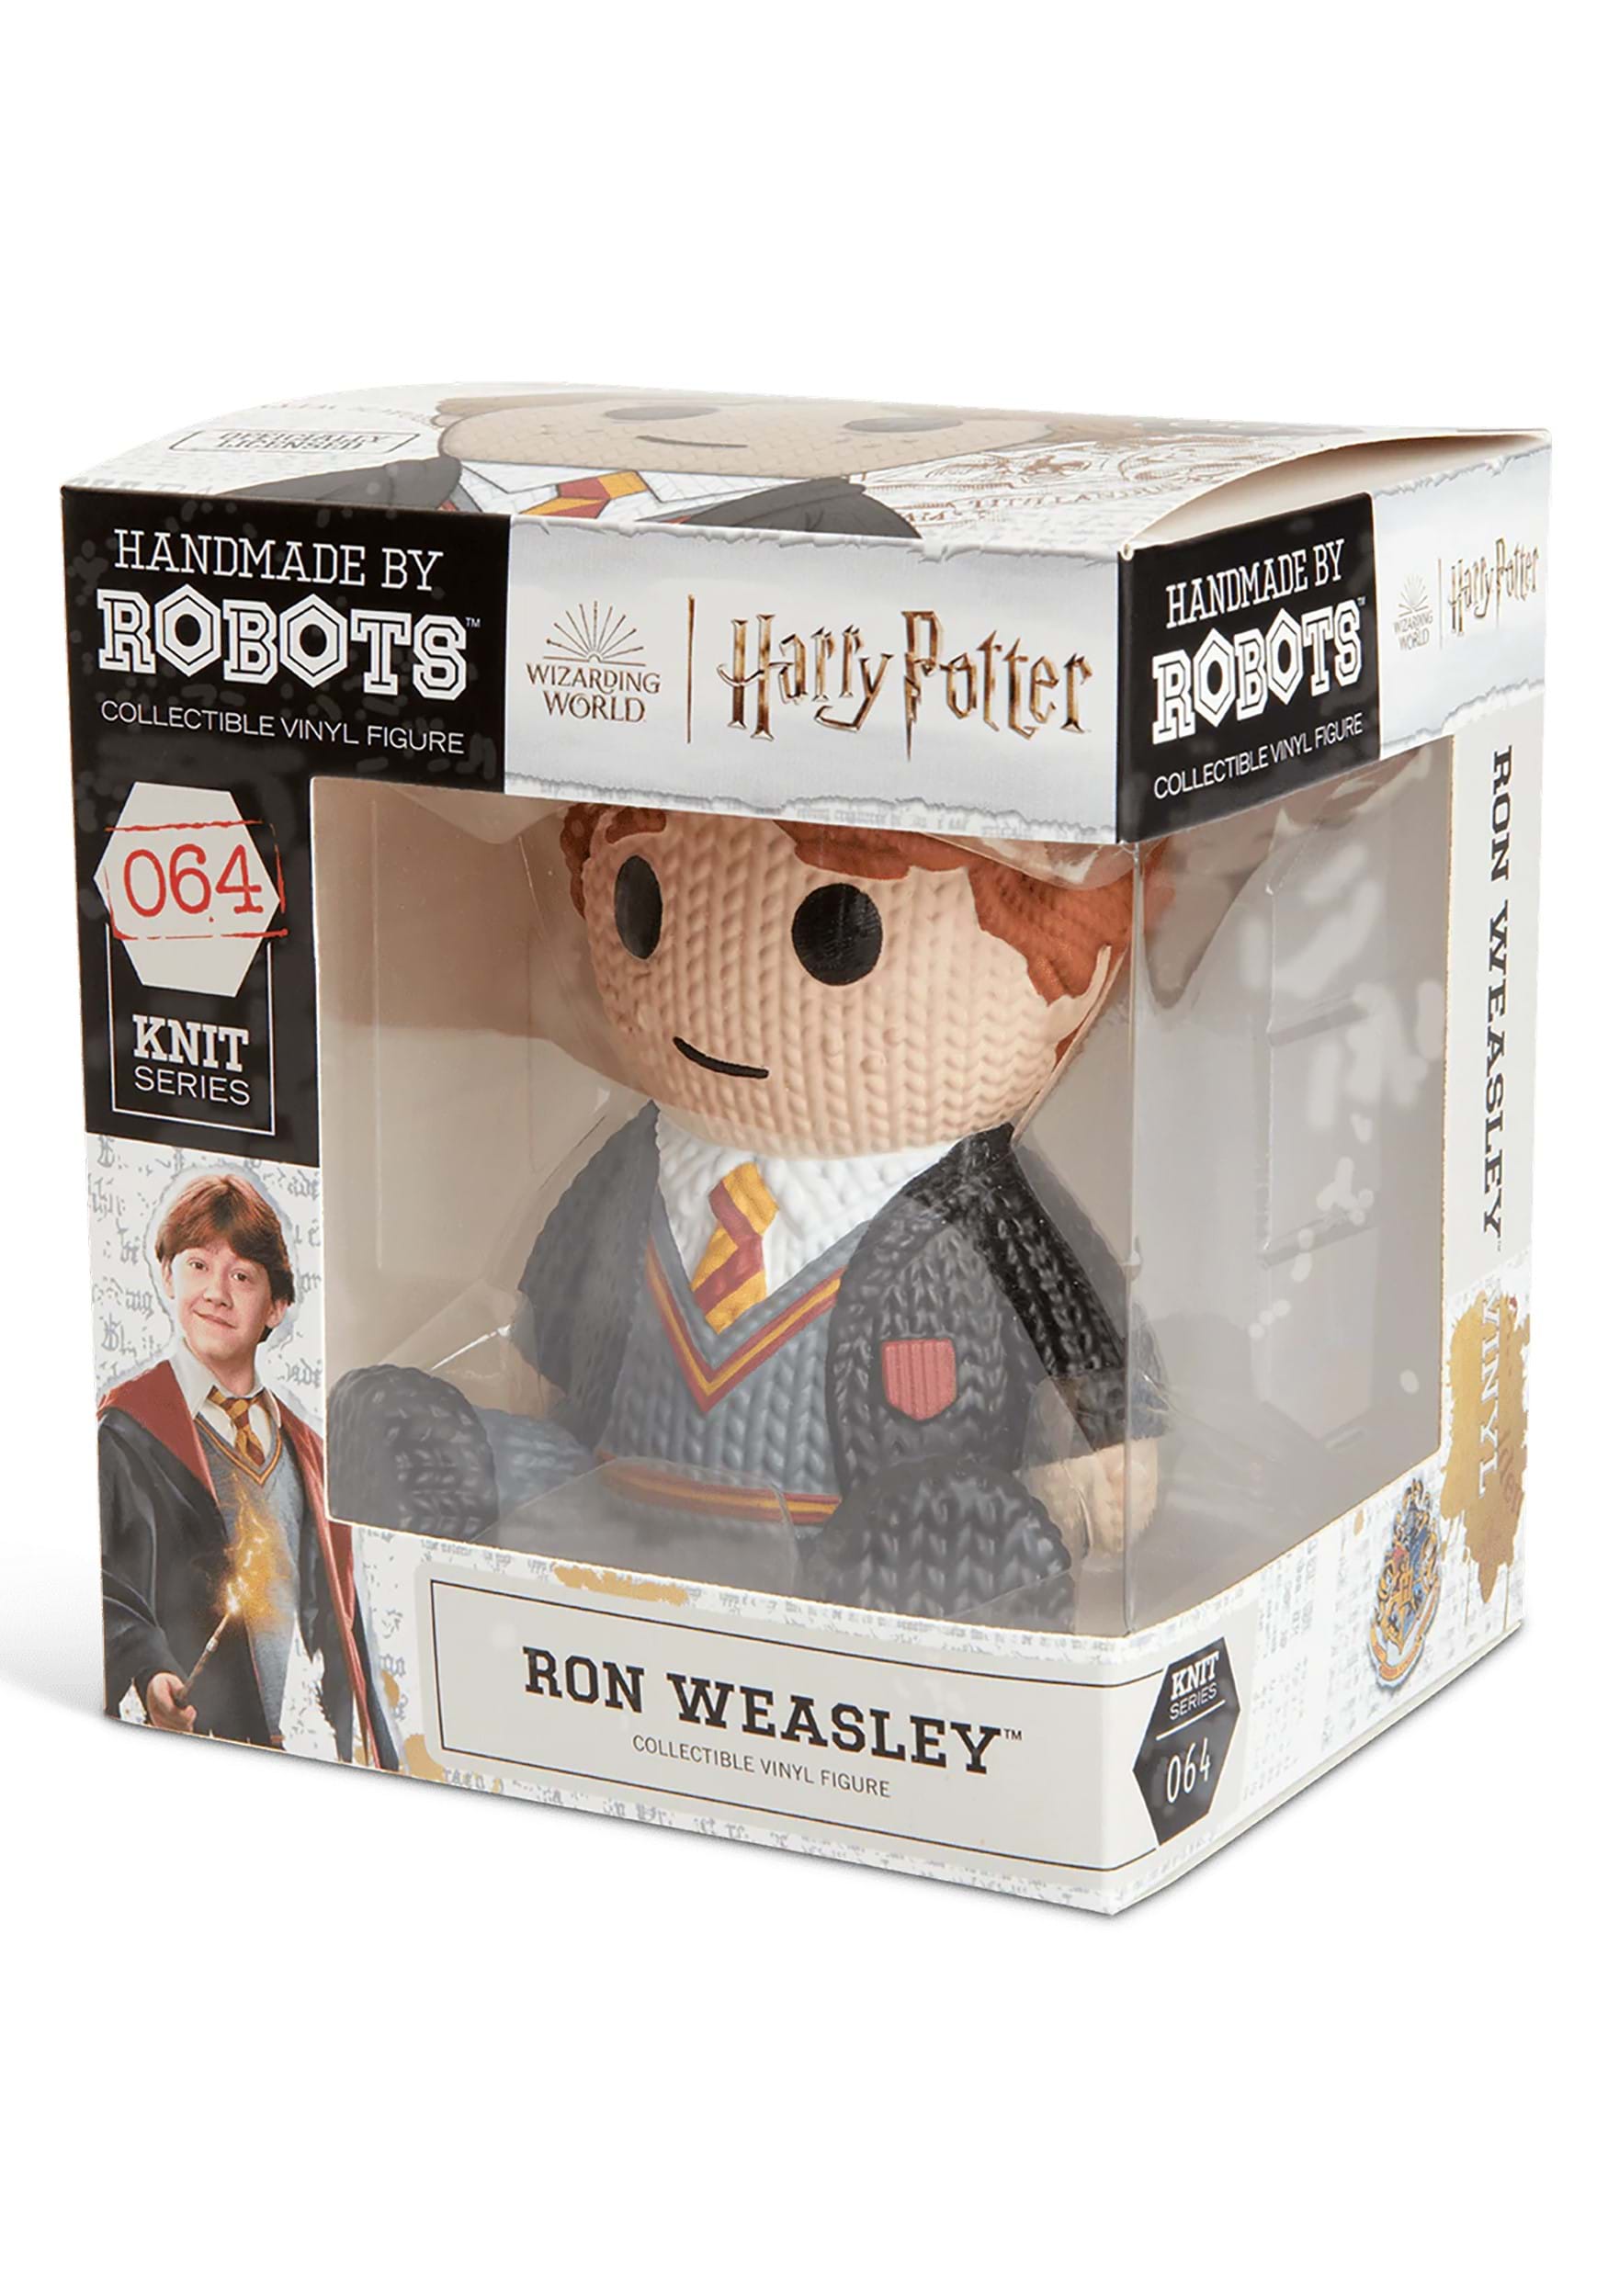 Handmade By Robots Wizarding World Ron Weasley Vinyl Figure